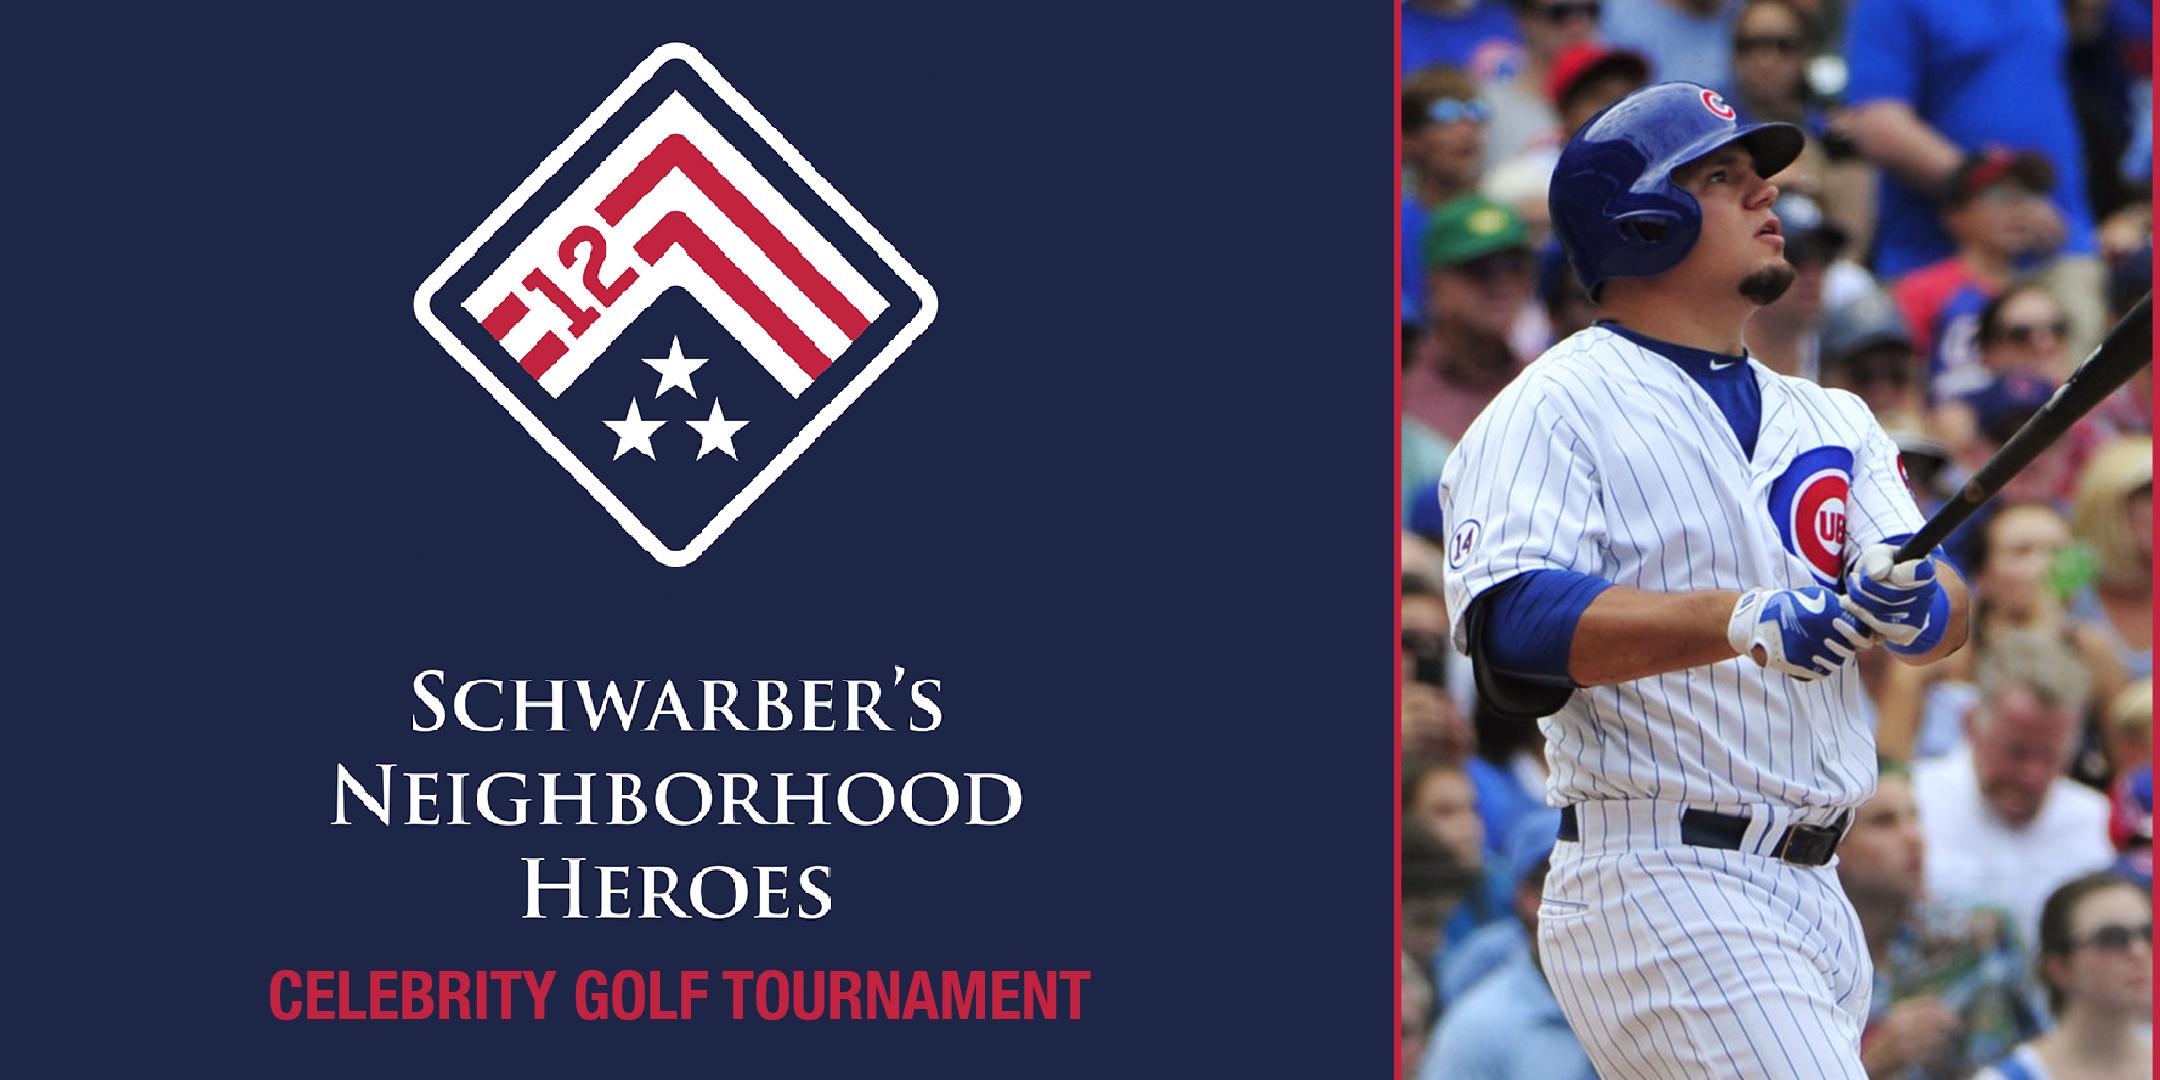 Schwarber's Neighborhood Heroes 1st Annual Celebrity Golf Tournament